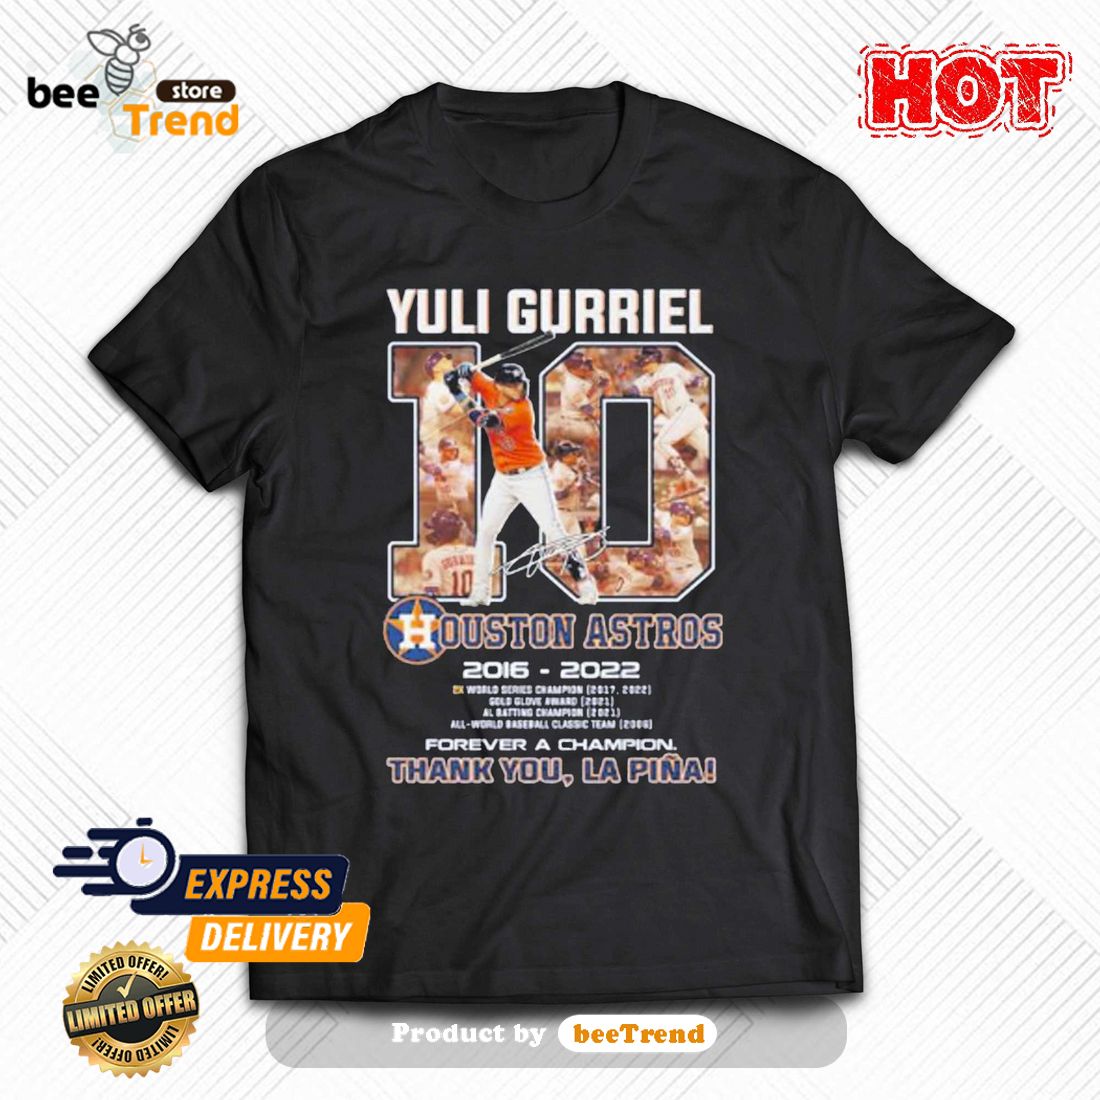 HOT 10 Yuli Gurriel Houston Astros 2016 2022 Forever A Champion